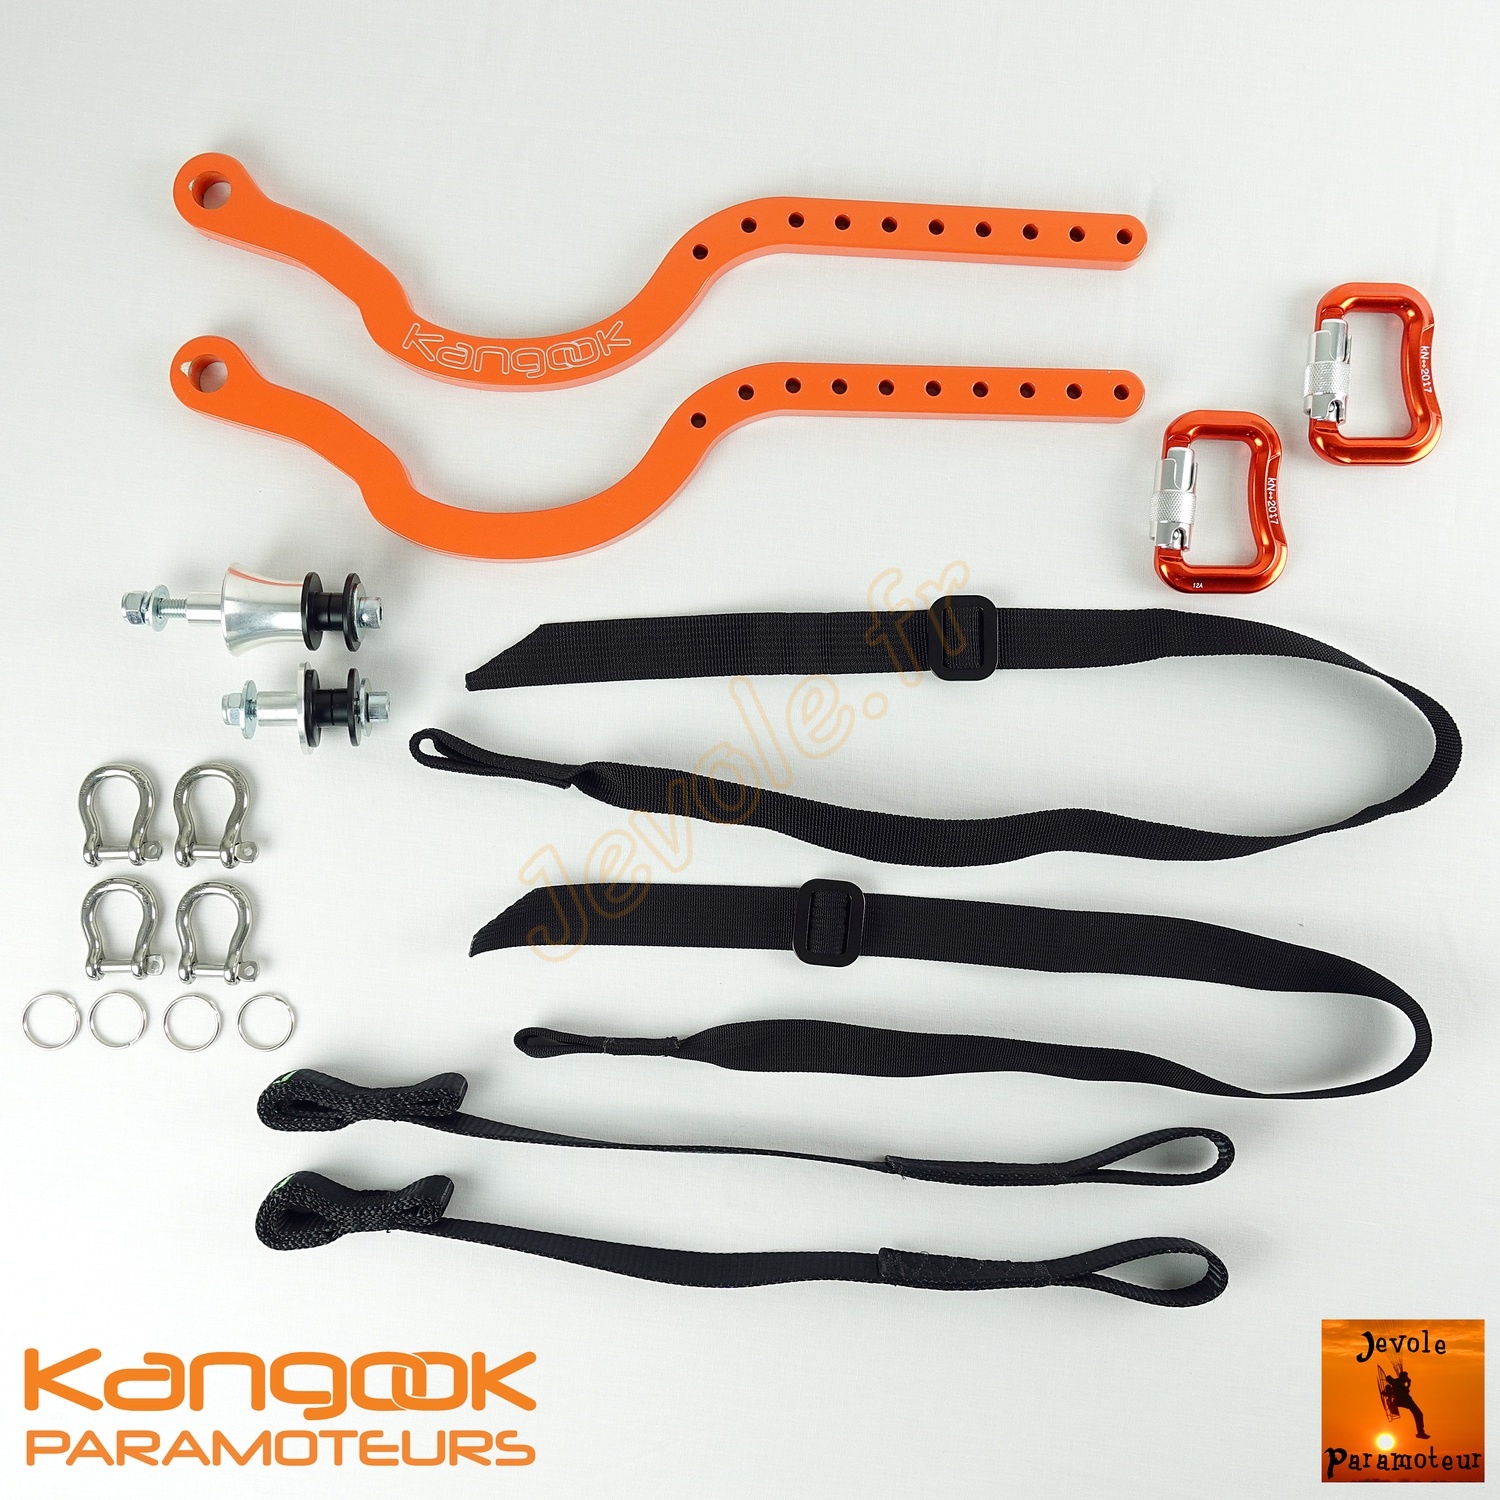 K2-kit-cannes-basses-mobiles-kangook-paramoteur-2